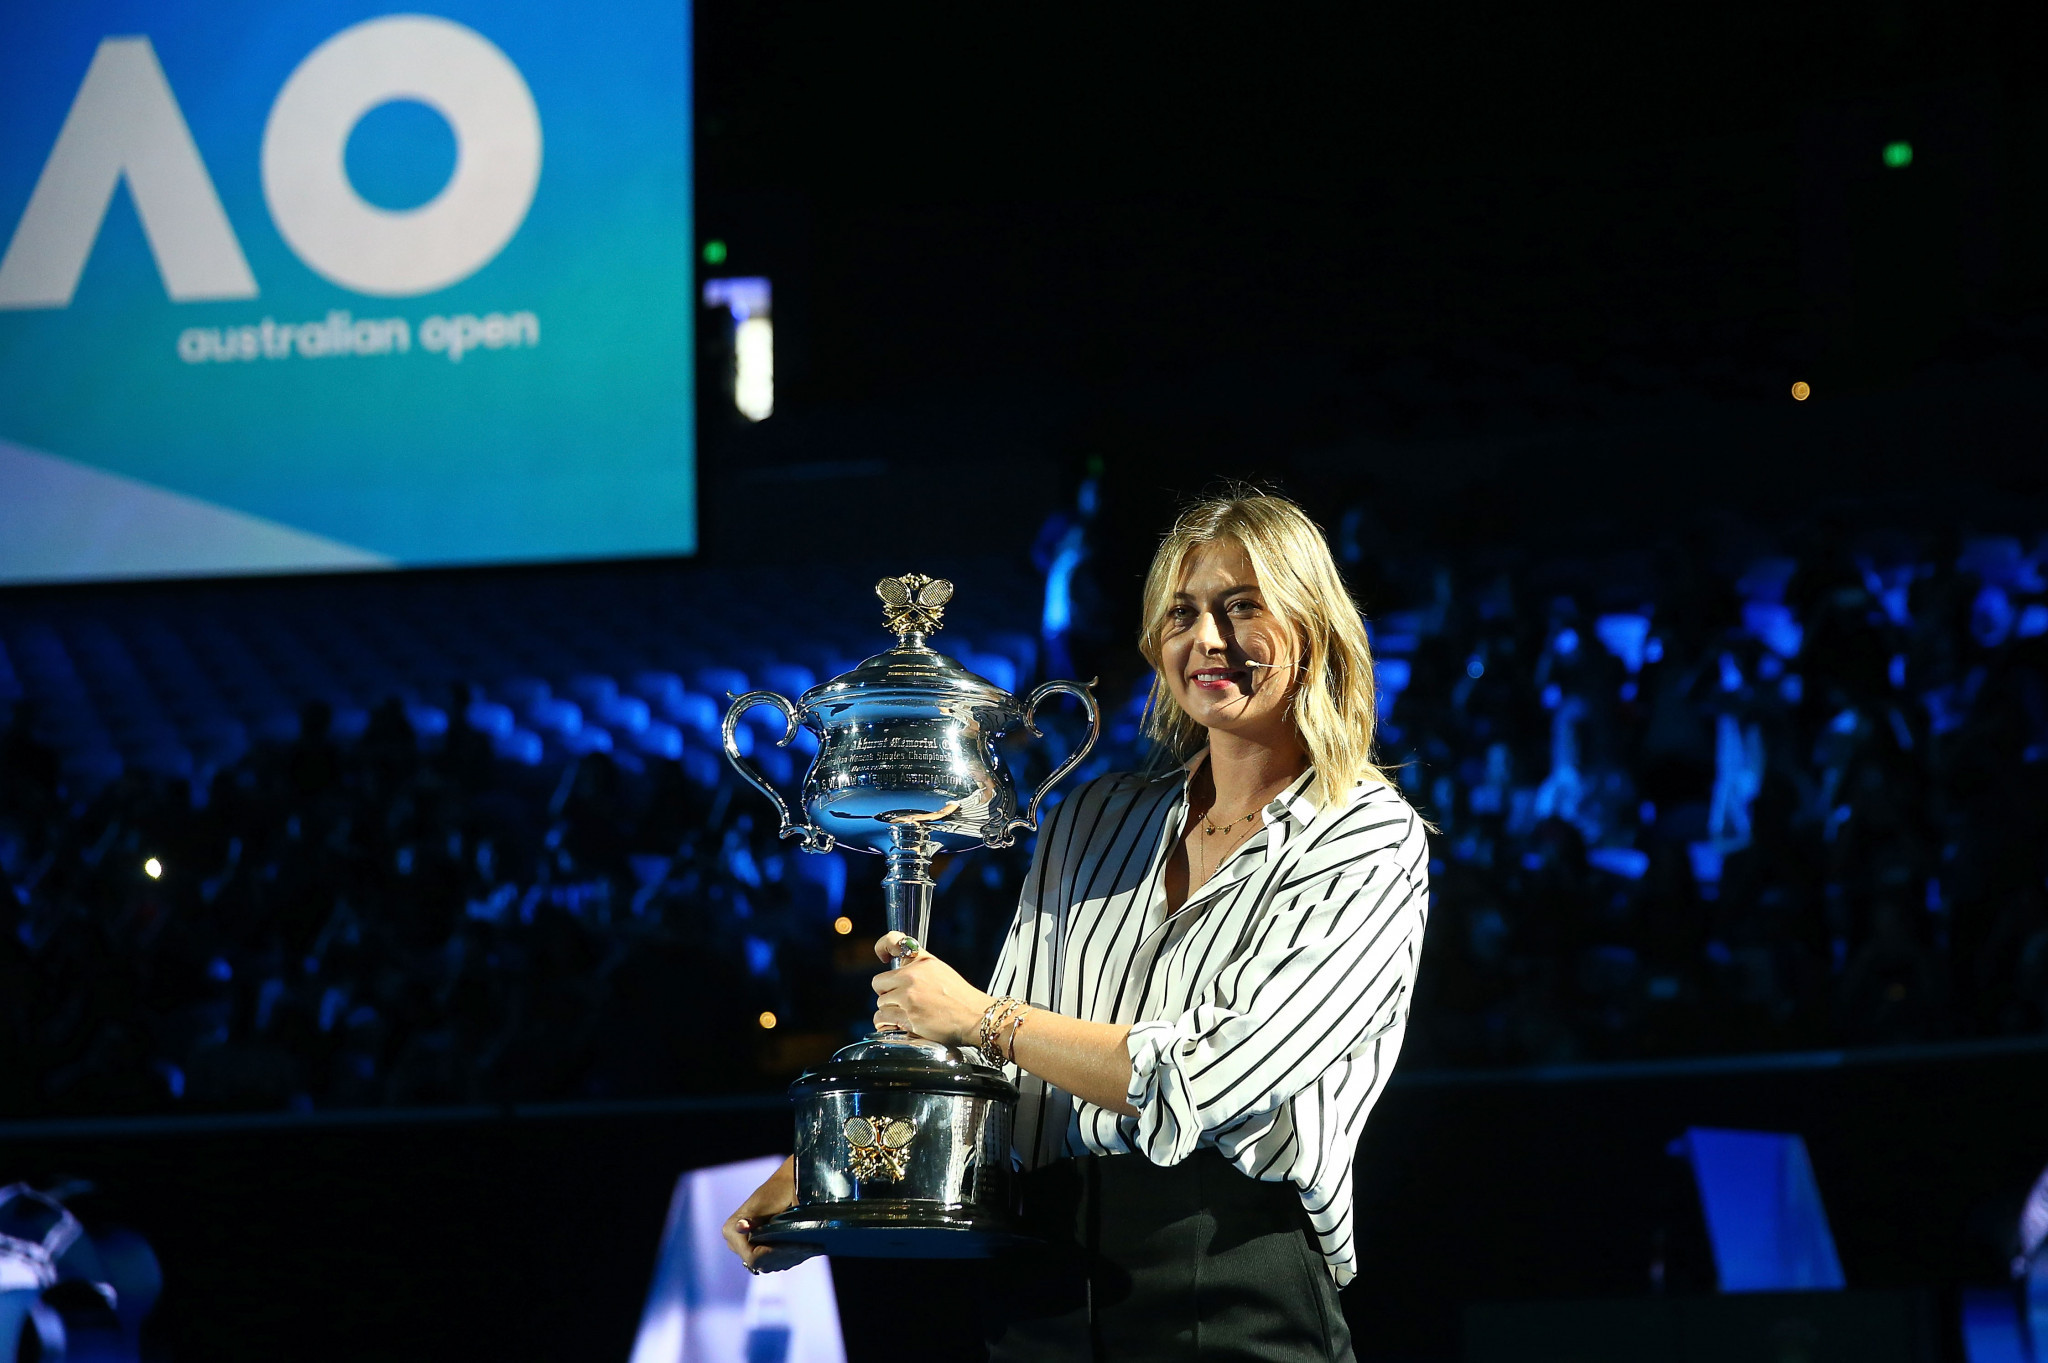 Australian Open defend Sharapova appearance at draw ceremony